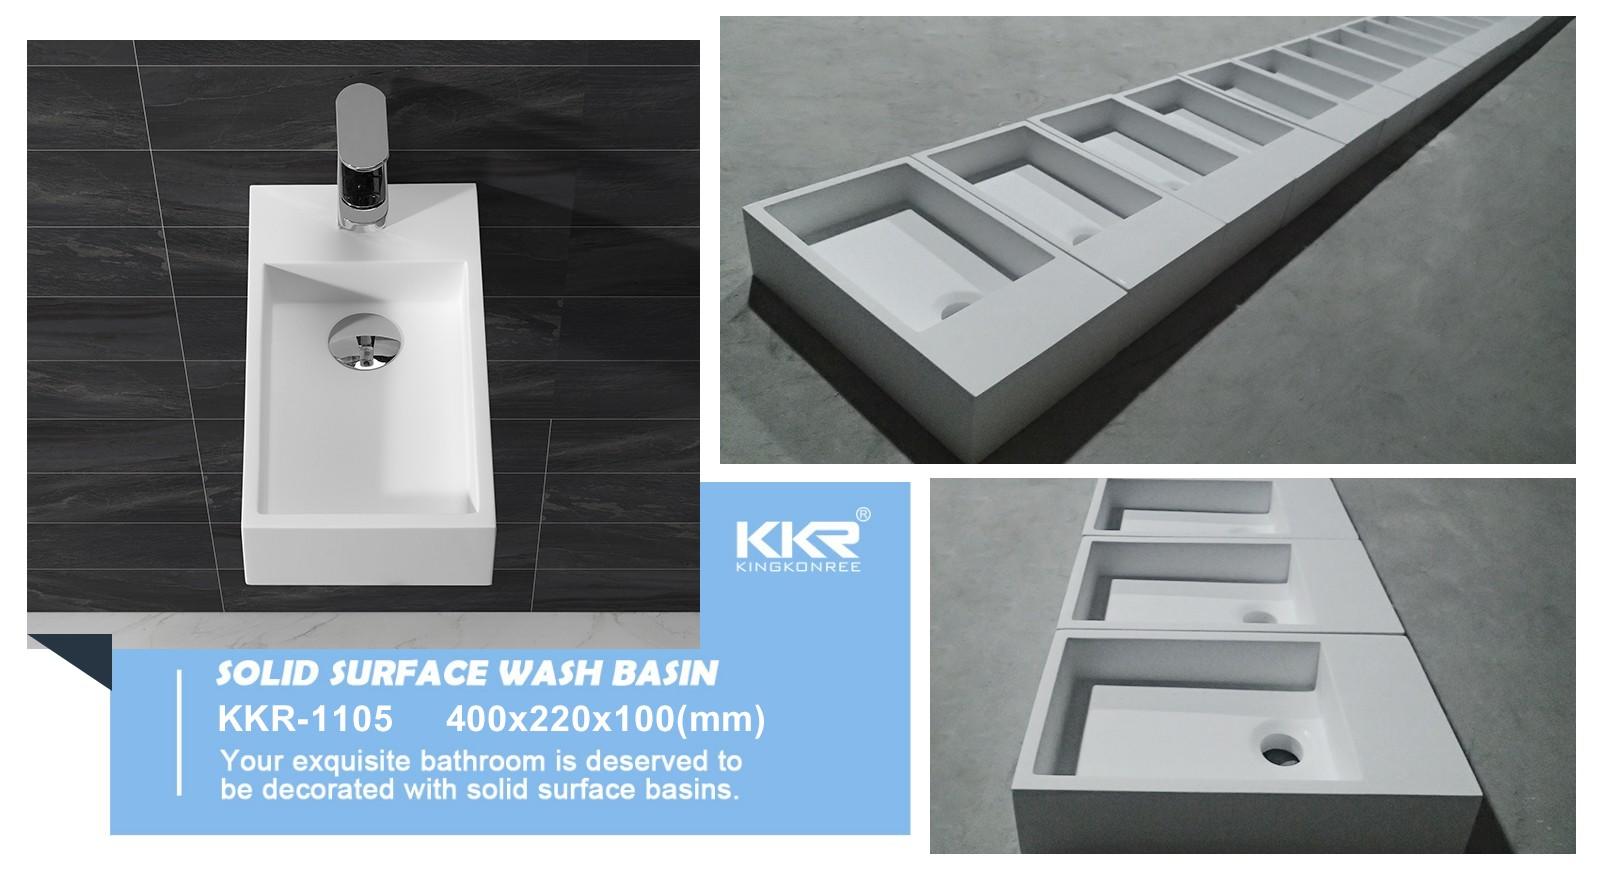 KingKonree double square wall mounted basin sink for toilet